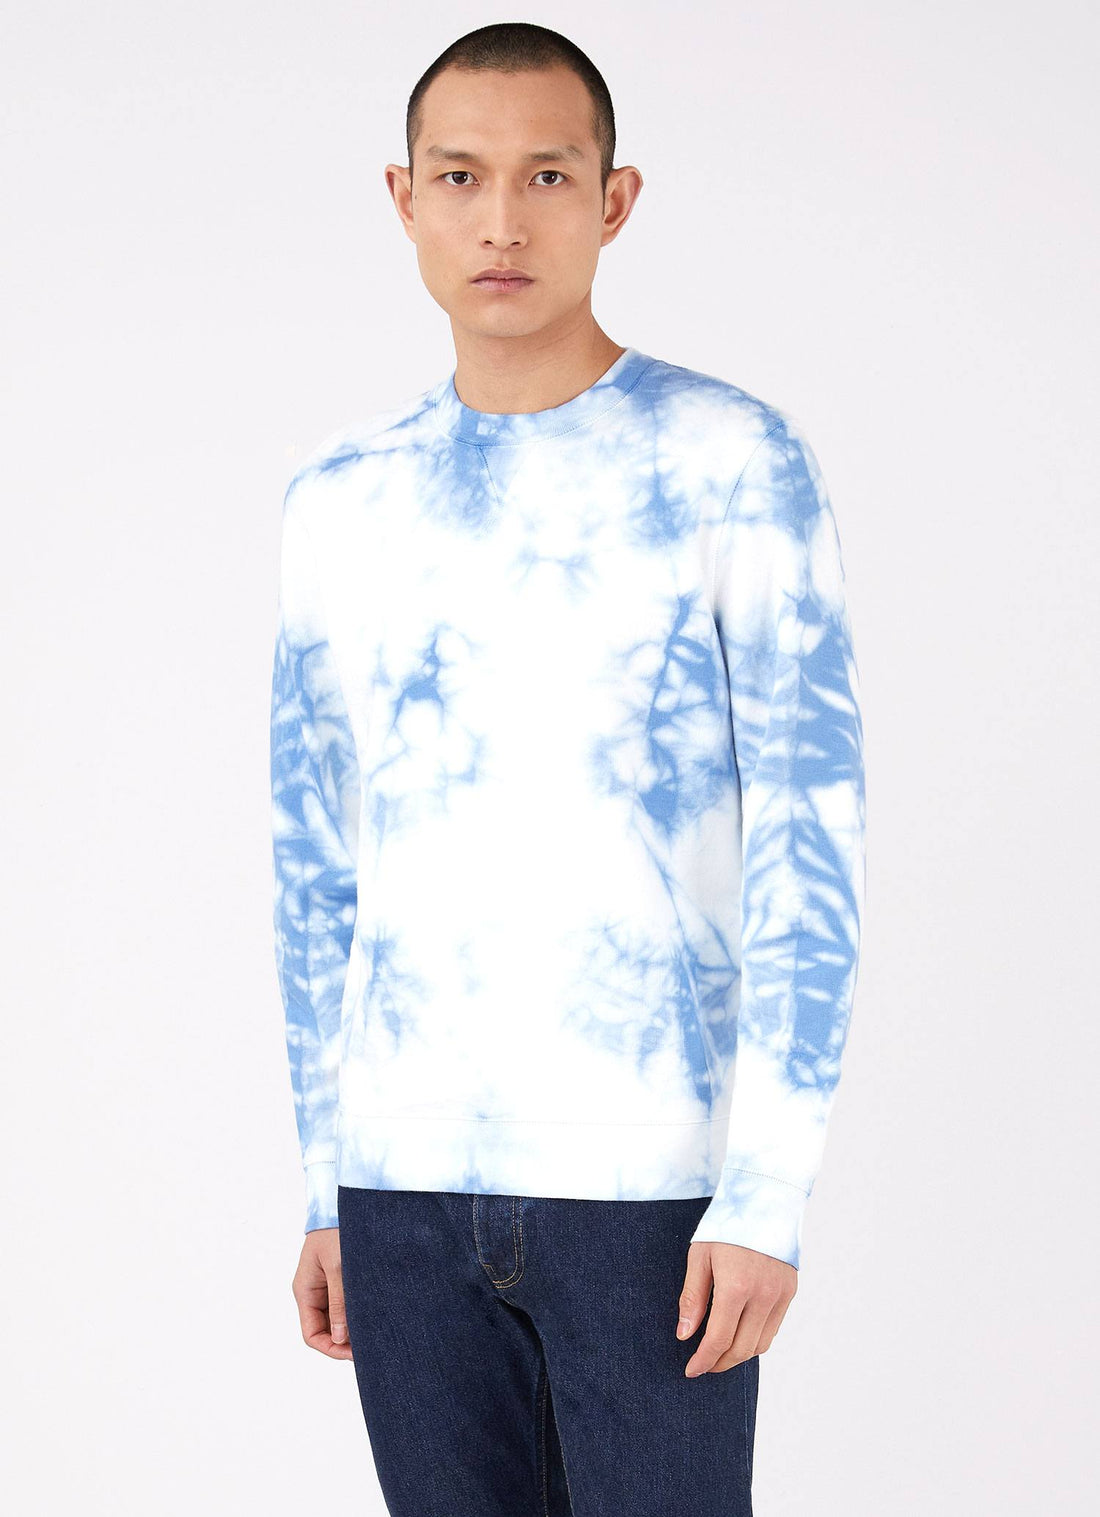 Men's Loopback Sweatshirt in Sky Blue Tie Dye